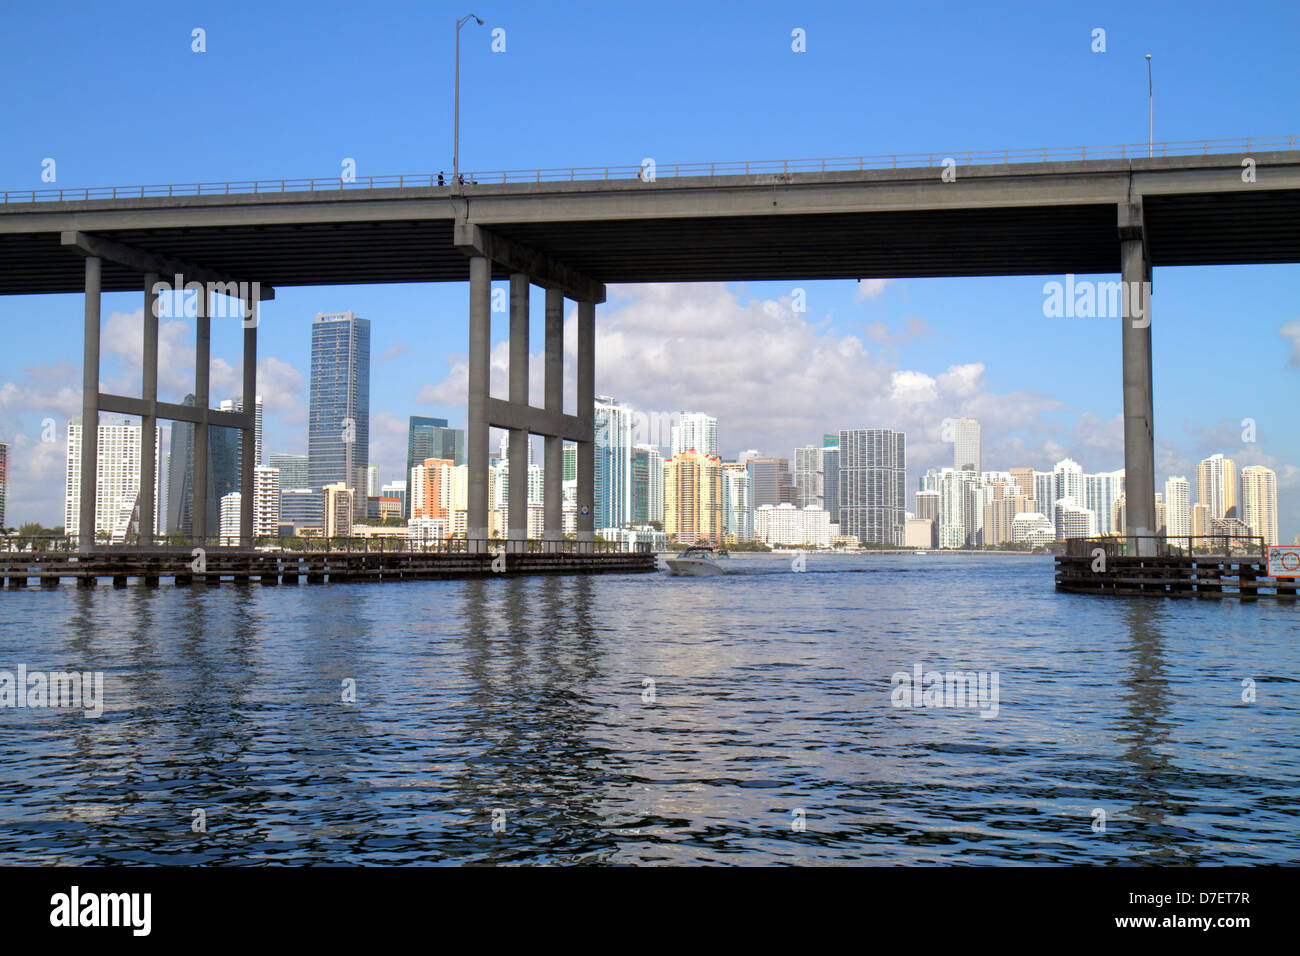 Miami Florida,Biscayne Bay water,Rickenbacker Causeway,bridge,city skyline cityscape,Brickell,downtown,water,skyscrapers,high rise skyscraper skyscrap Stock Photo